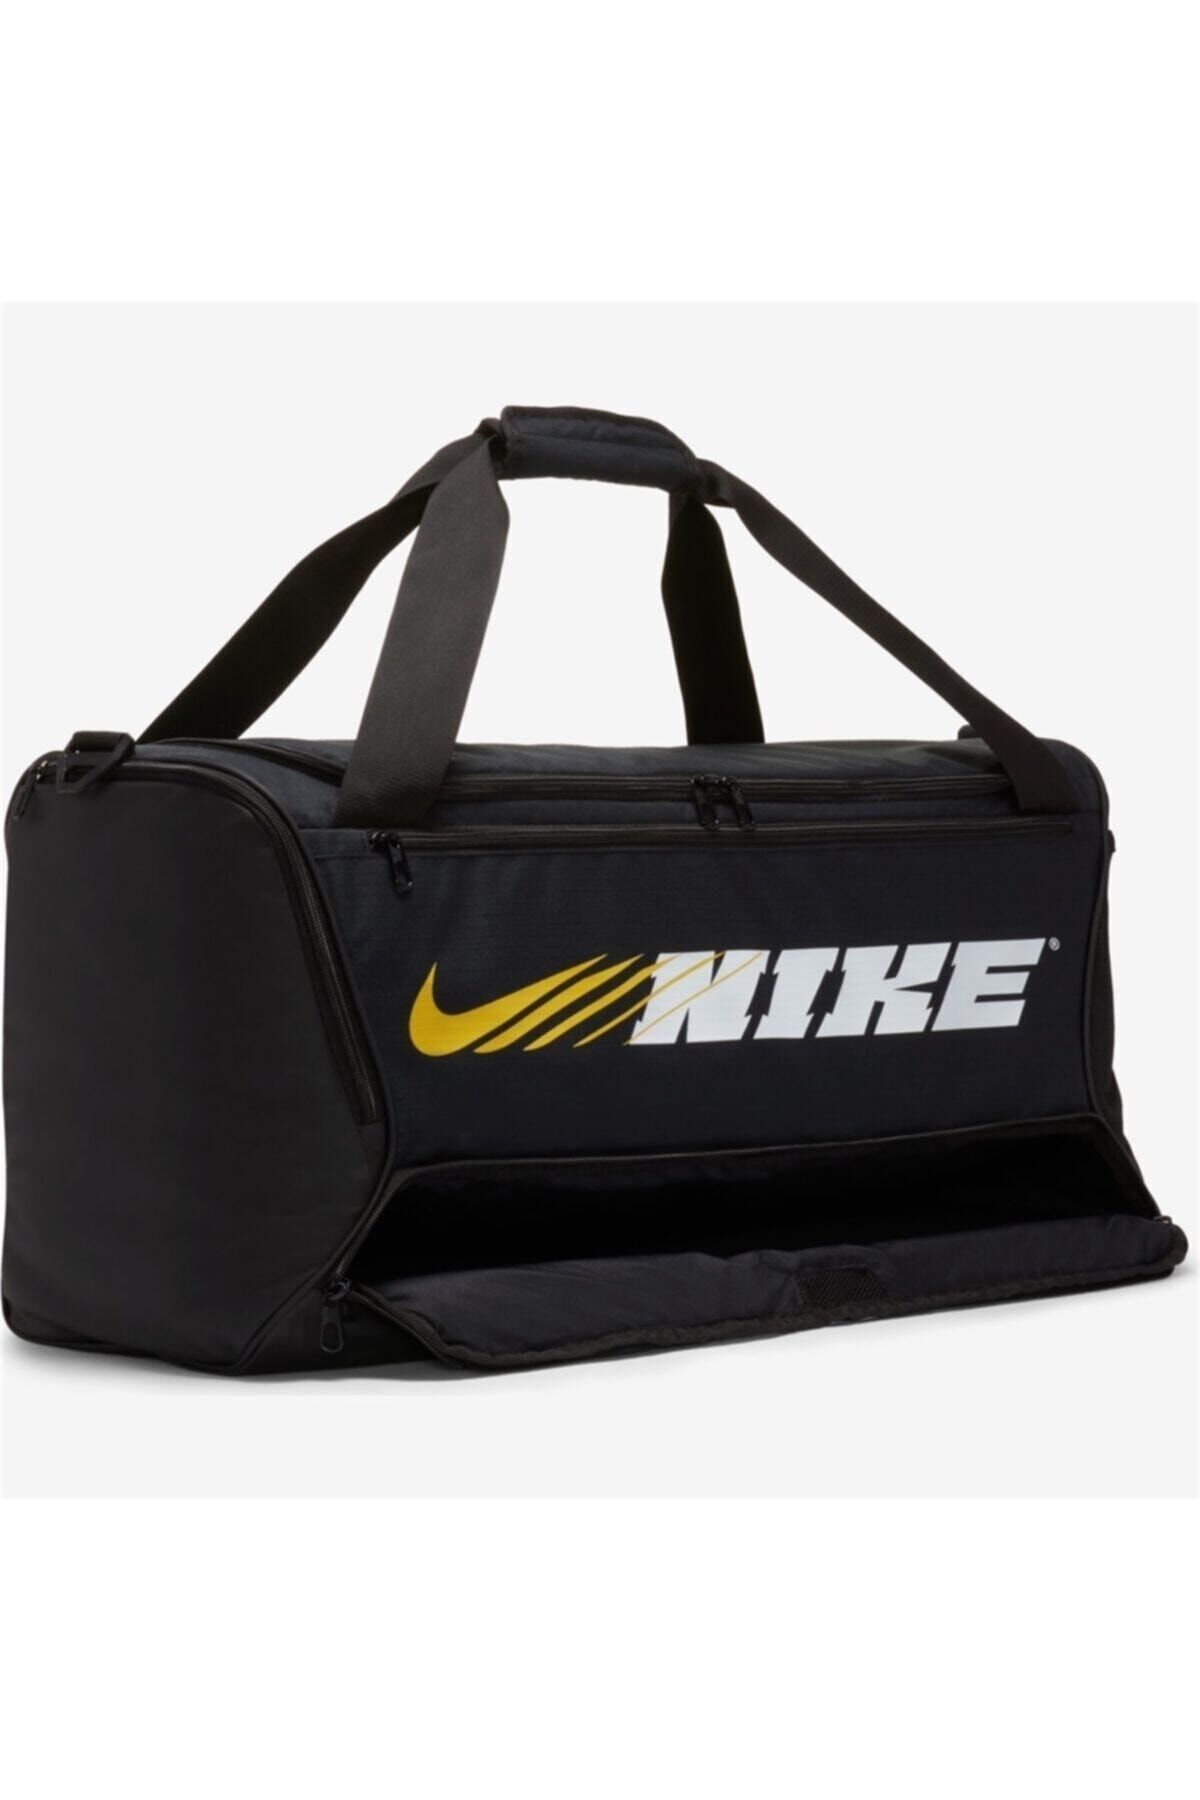 Nike Nıke Brasılıa Gpx Tr Duffel Bag (m) Spor Çanta (63*30*30cm) Cu9477-011